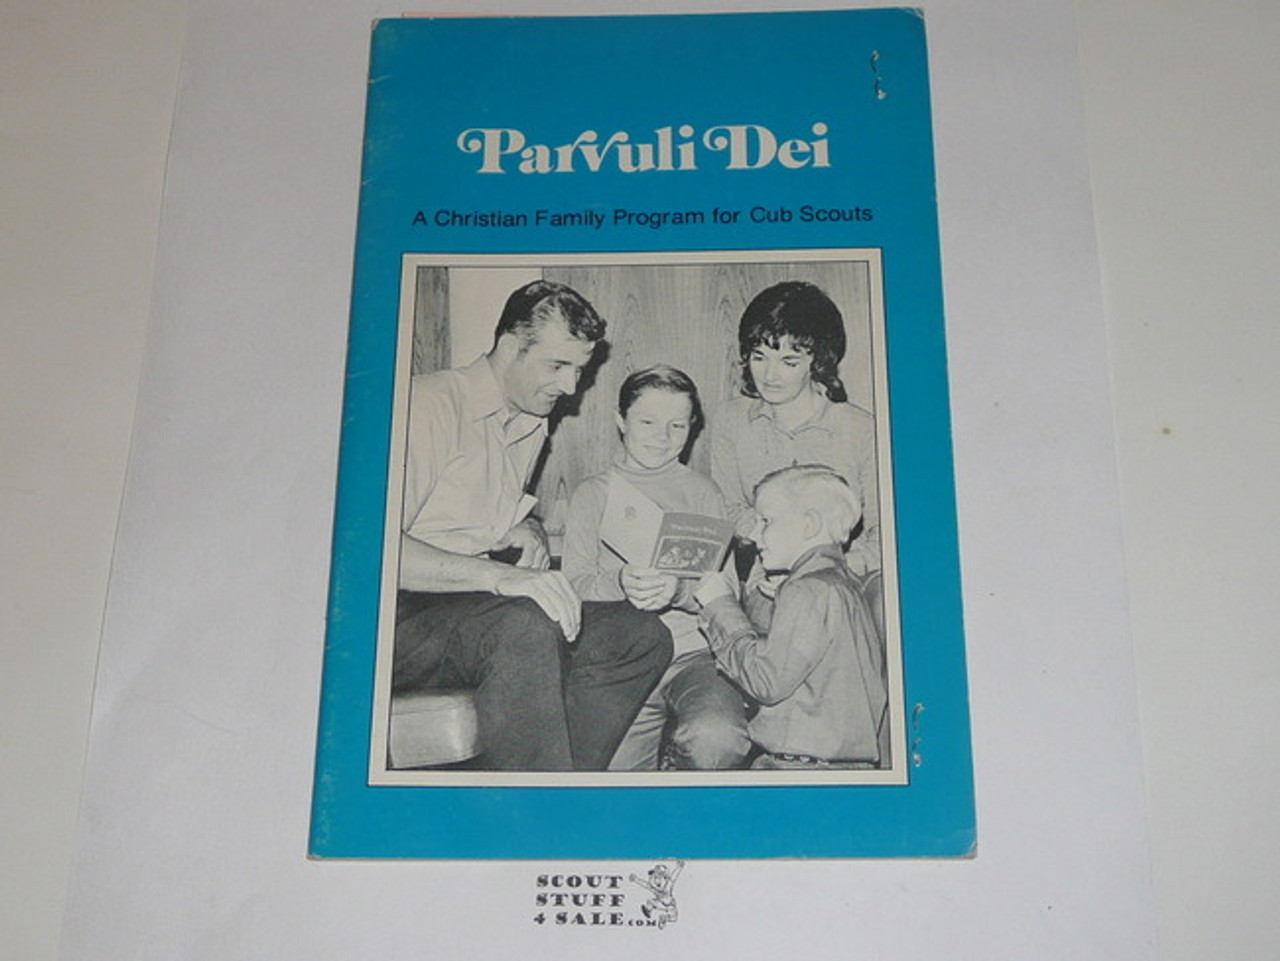 Christian, Parvuli Dei A Christian Family Program for Cub Scouts Manual, 1970's printing